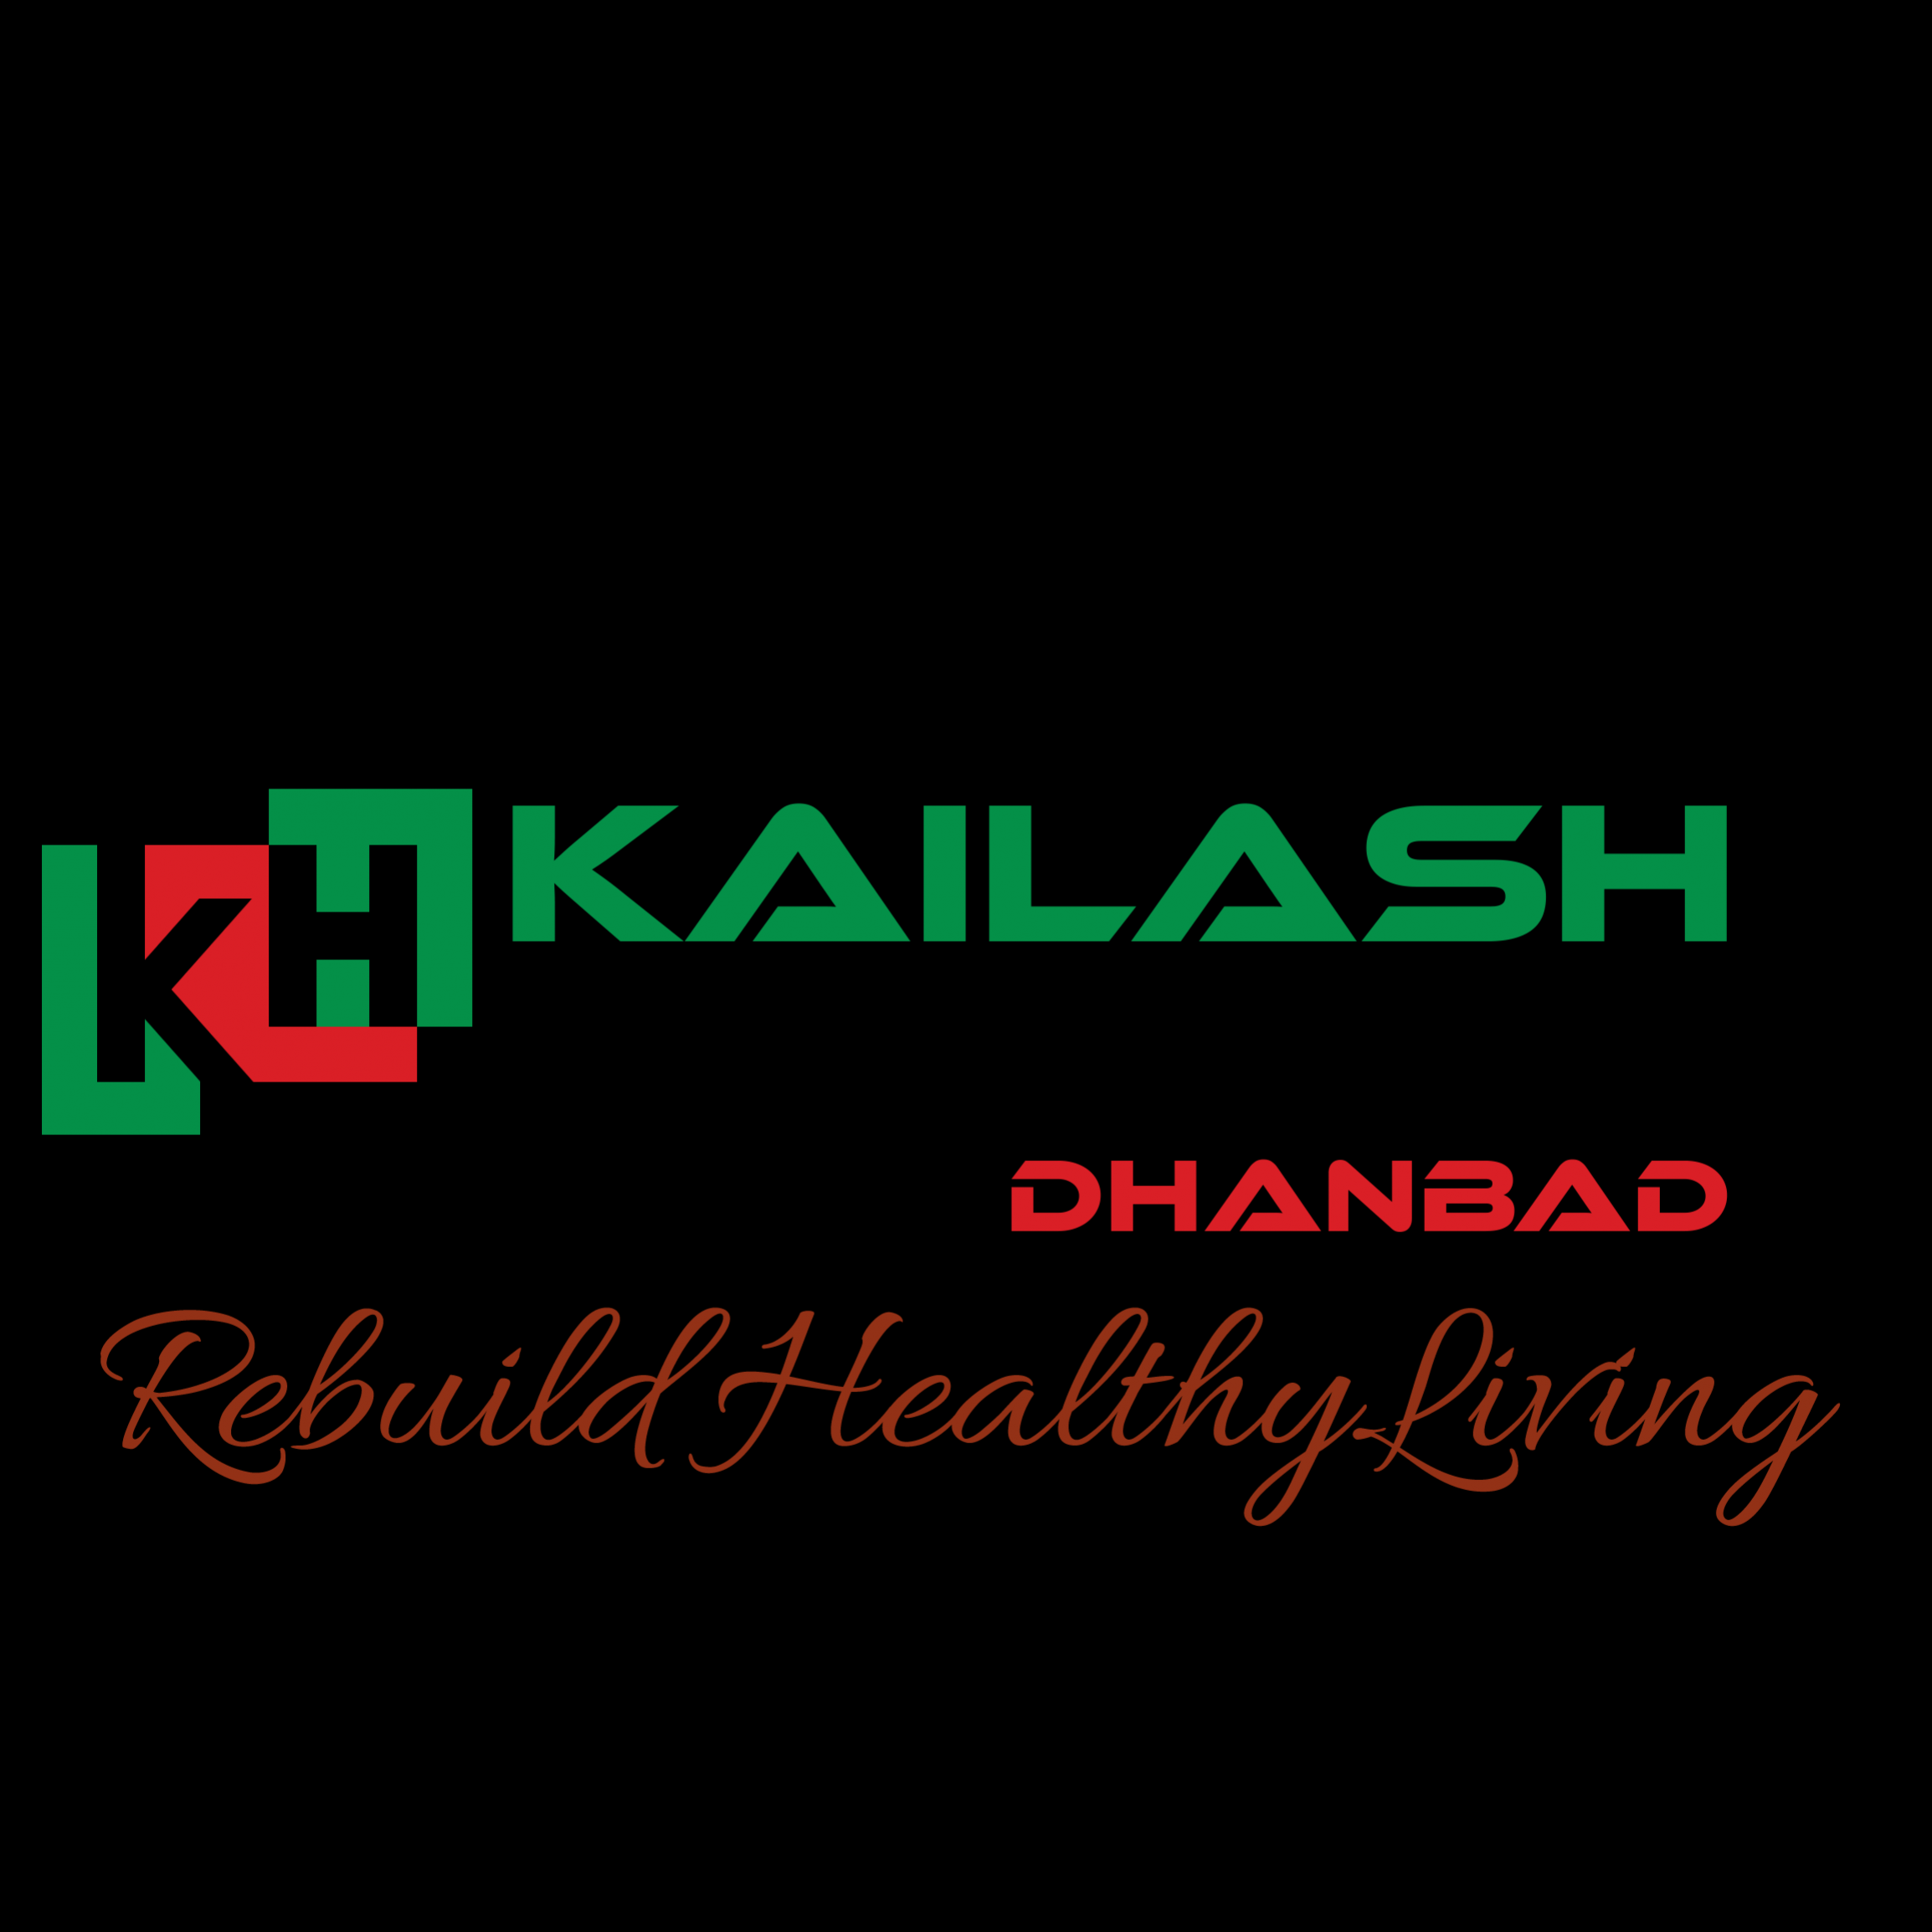 Kailash Hospital Online Presentations Channel